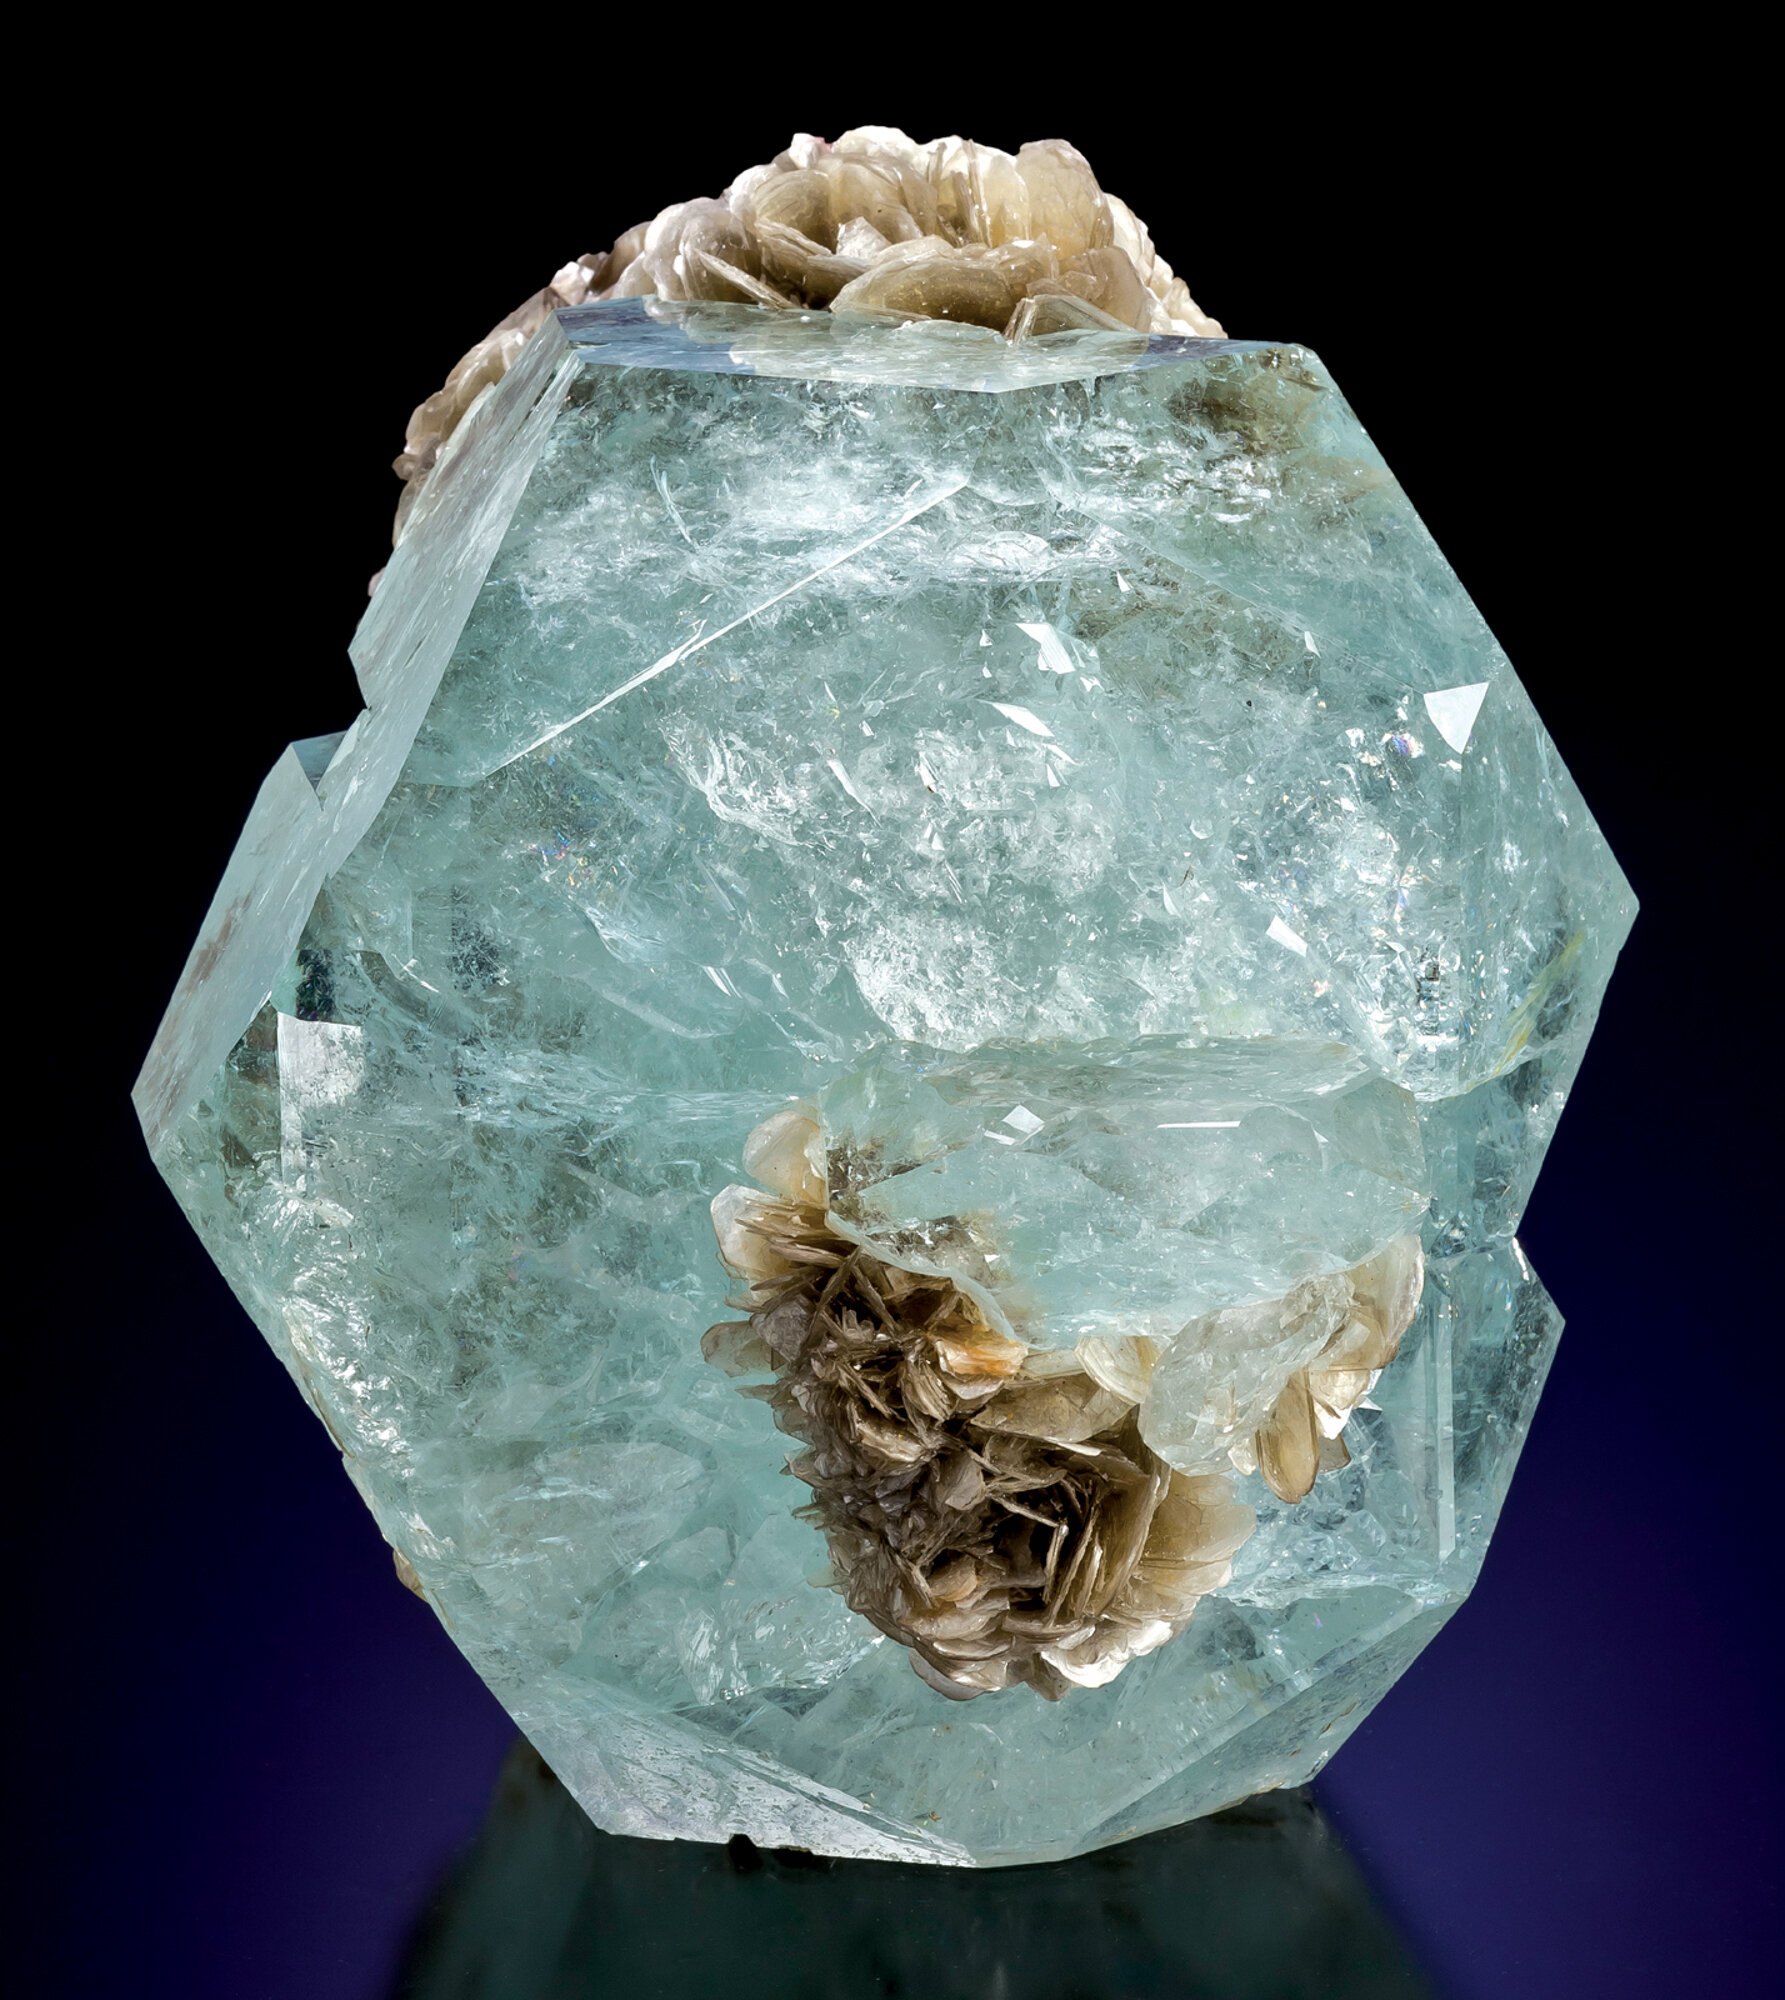  Aquamarine crystal with muscovite, 12 cm, from the Pingwu mine, Huya Township, Mt. Xuebaoding, Pingwu County, Mianyang Prefecture, Sichuan Province, China. 